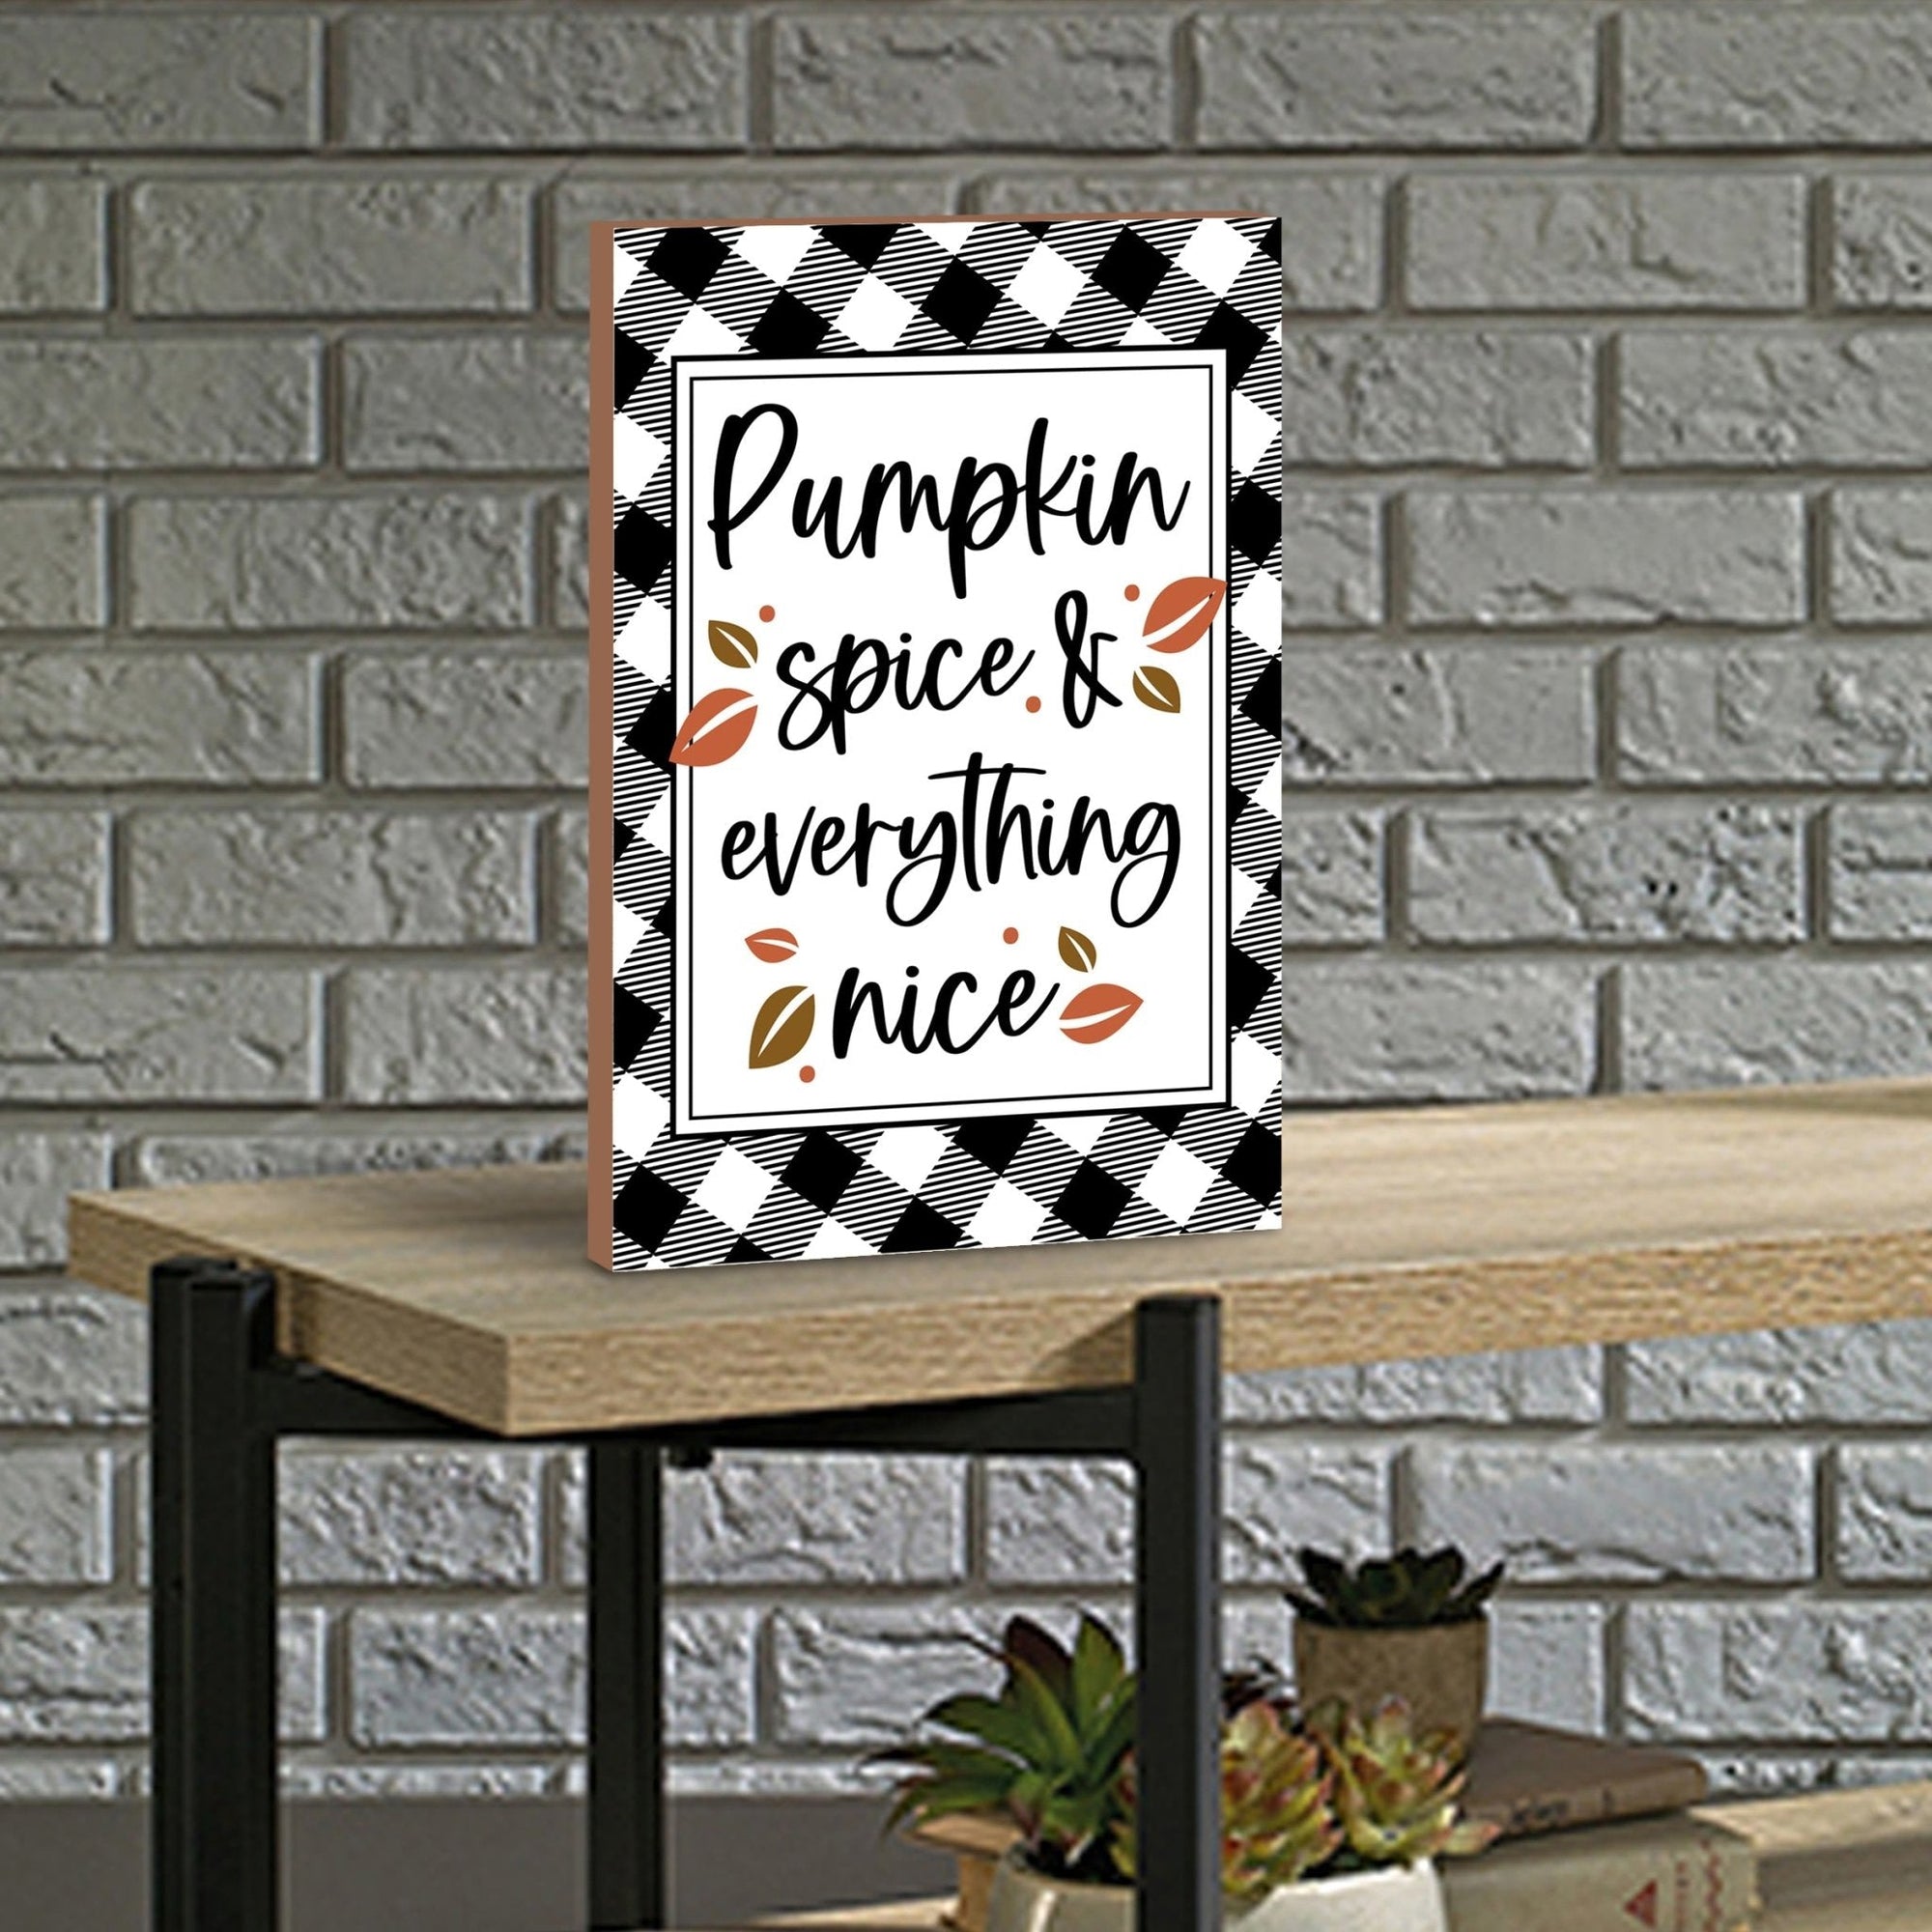 Fall Season Inspirational Shelf Décor and Tabletop Signs - LifeSong Milestones